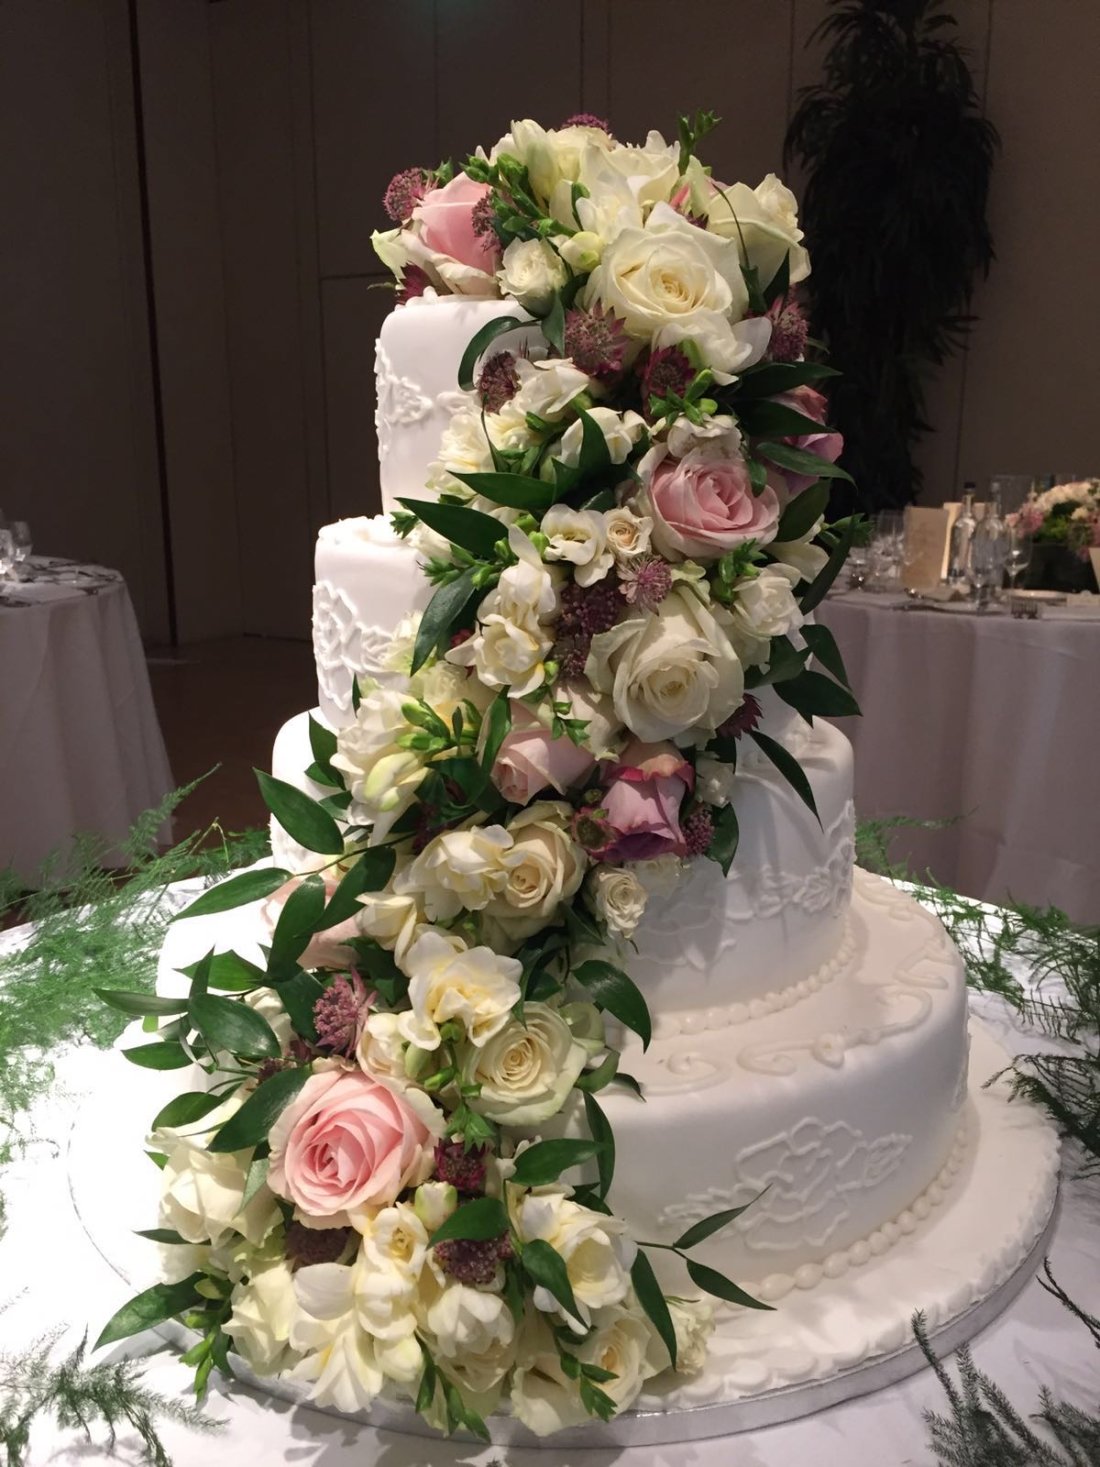 flowers-cake-wedding-pastel-roses-bride